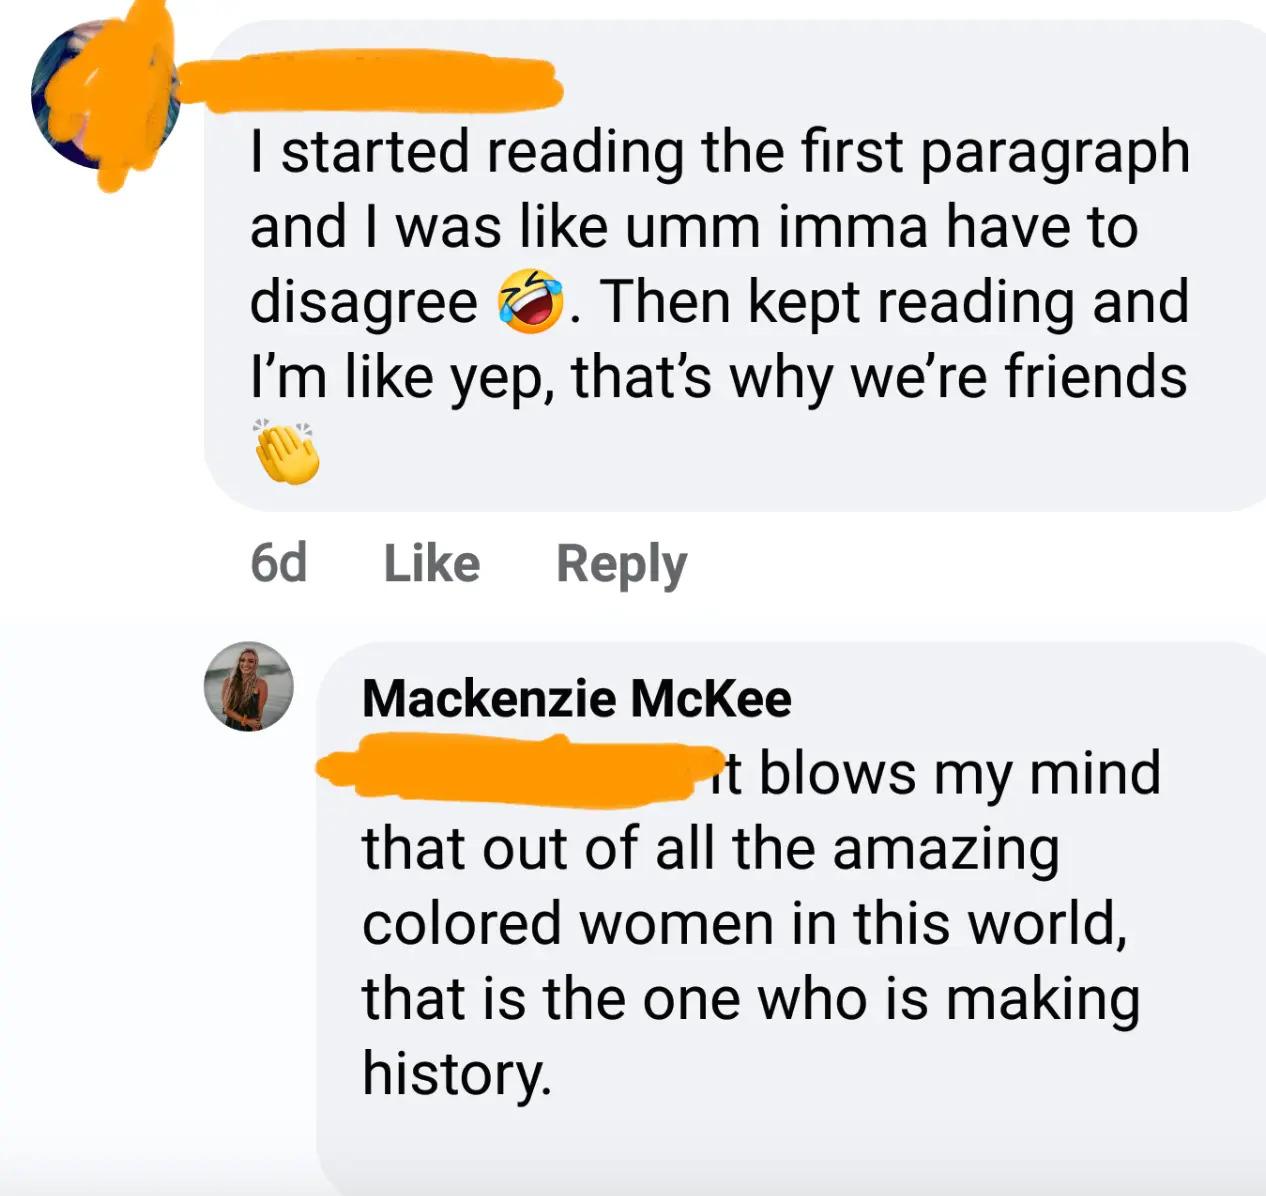 Mackenzie McKee's racist comment online